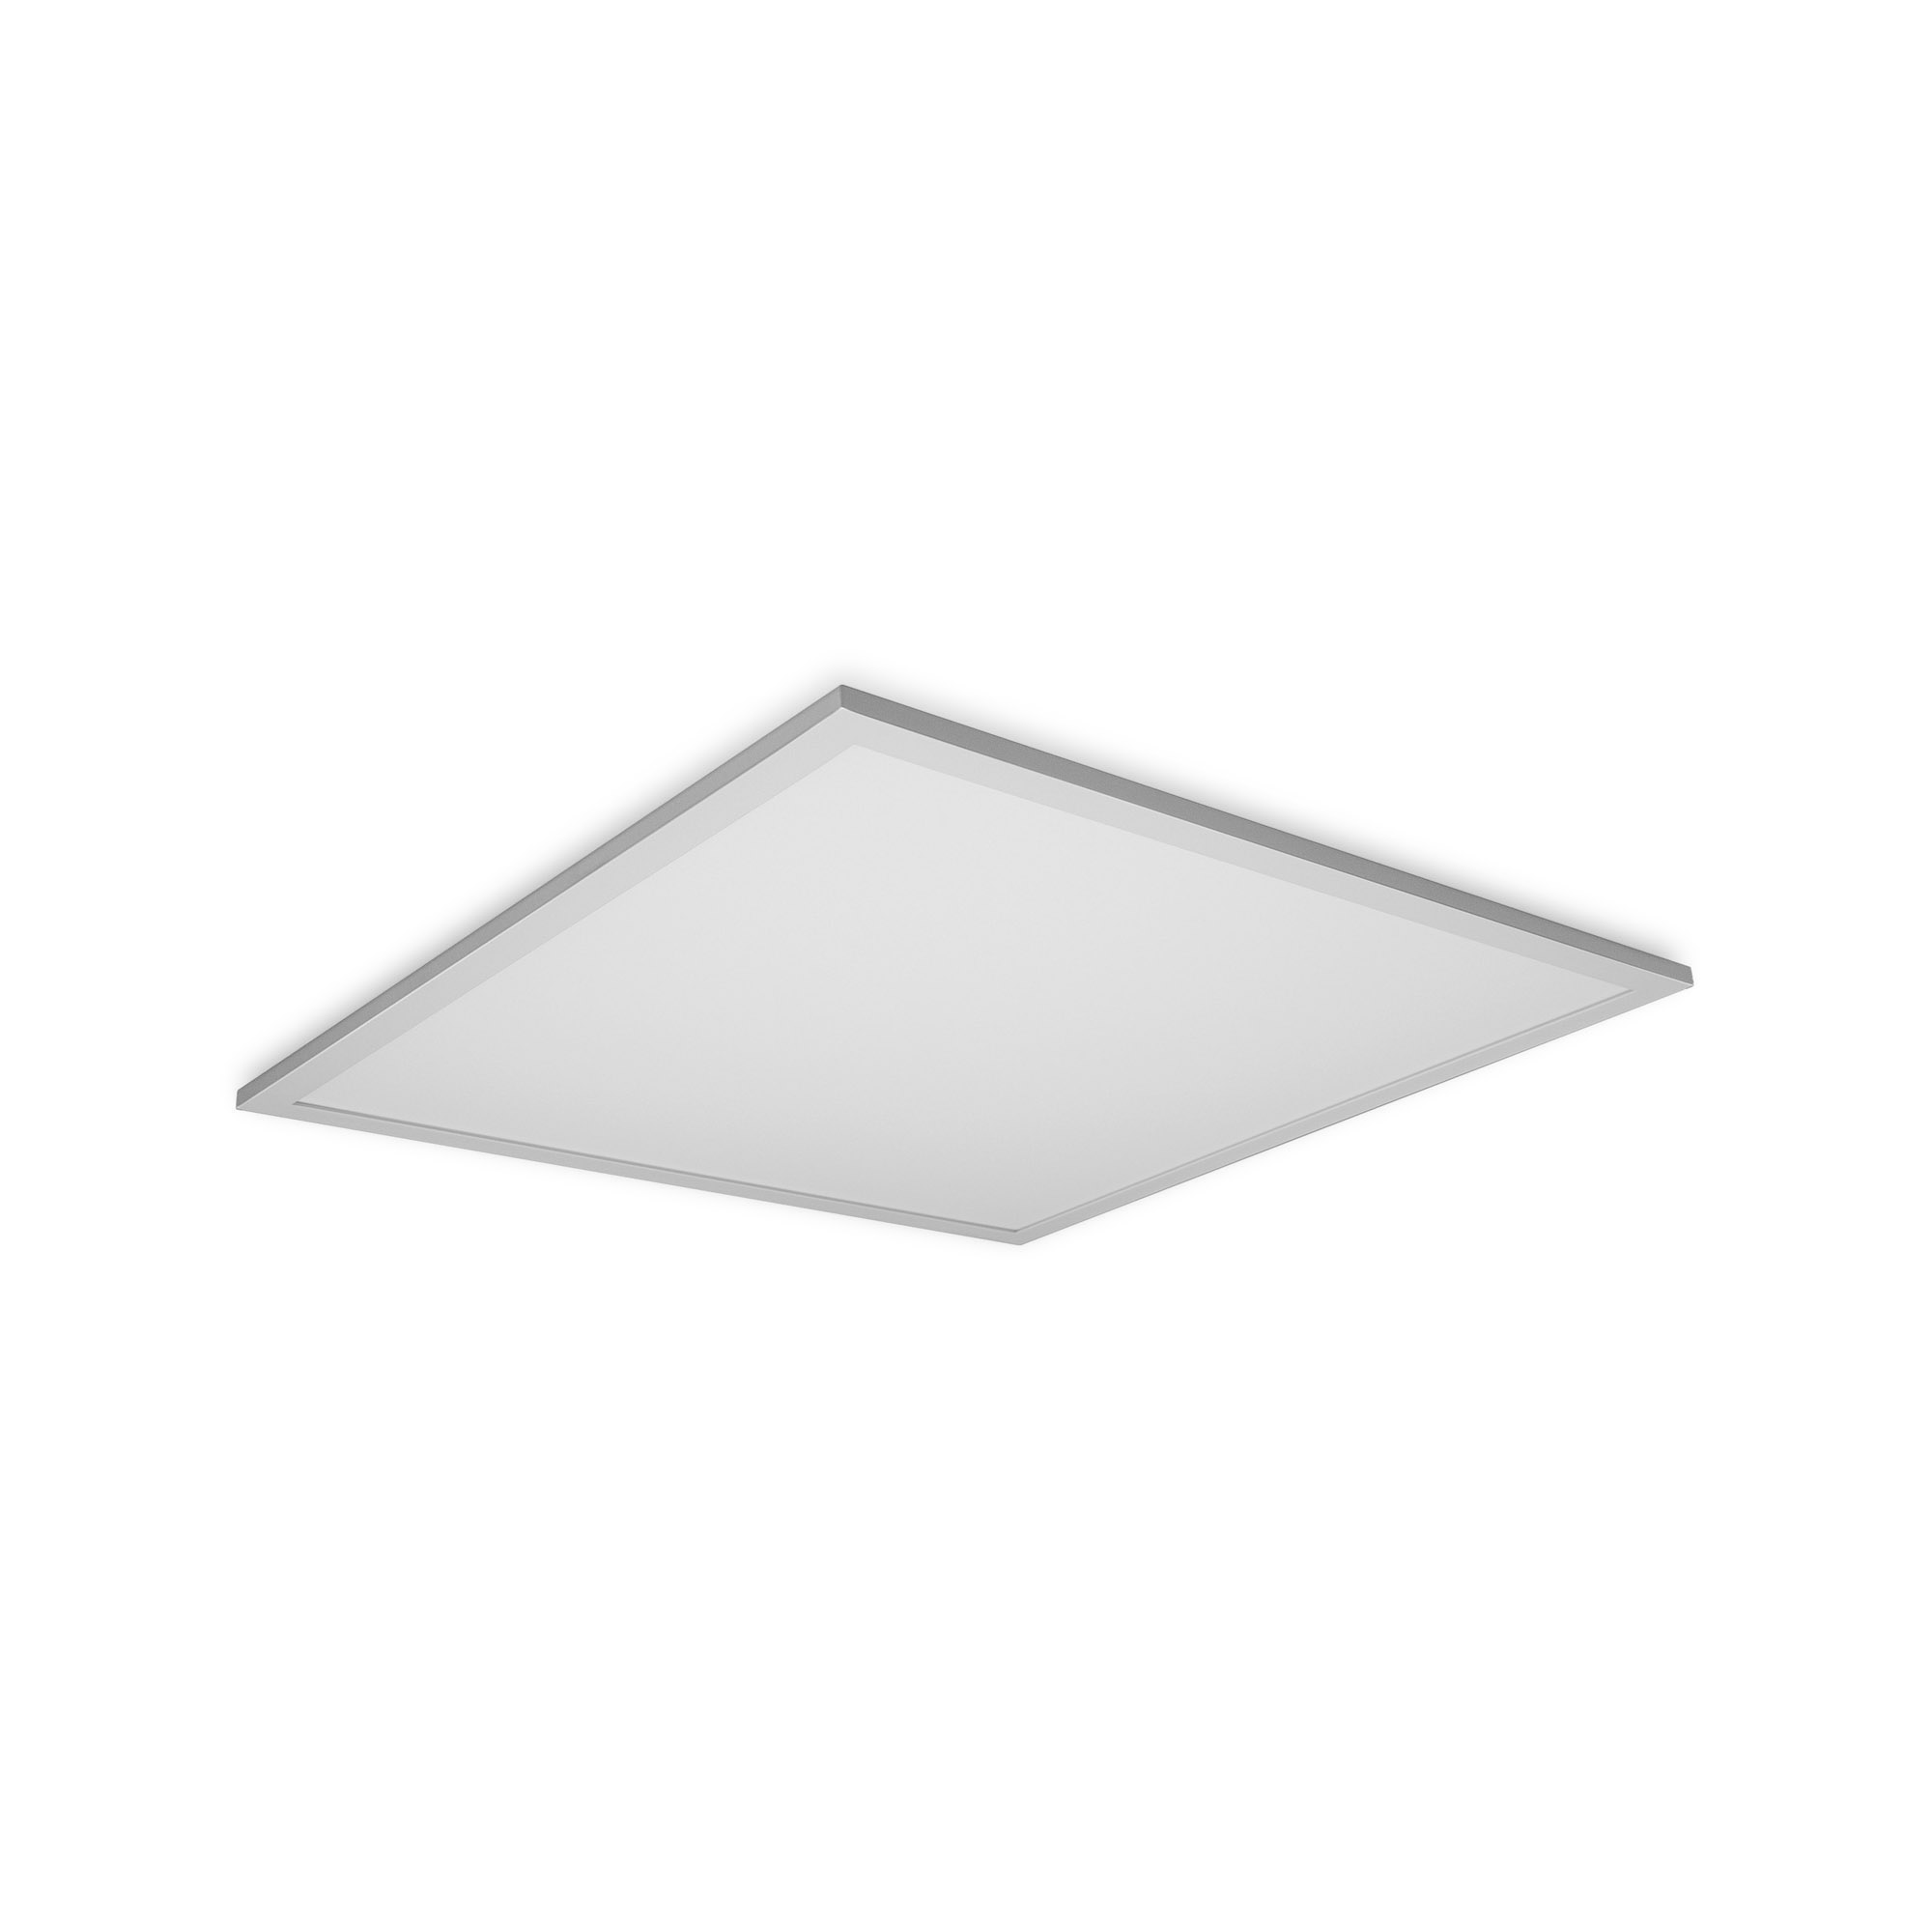 LEDVANCE SMART+ WiFi Tunable White LED Panel PLANON PLUS 60x60cm 3000lm